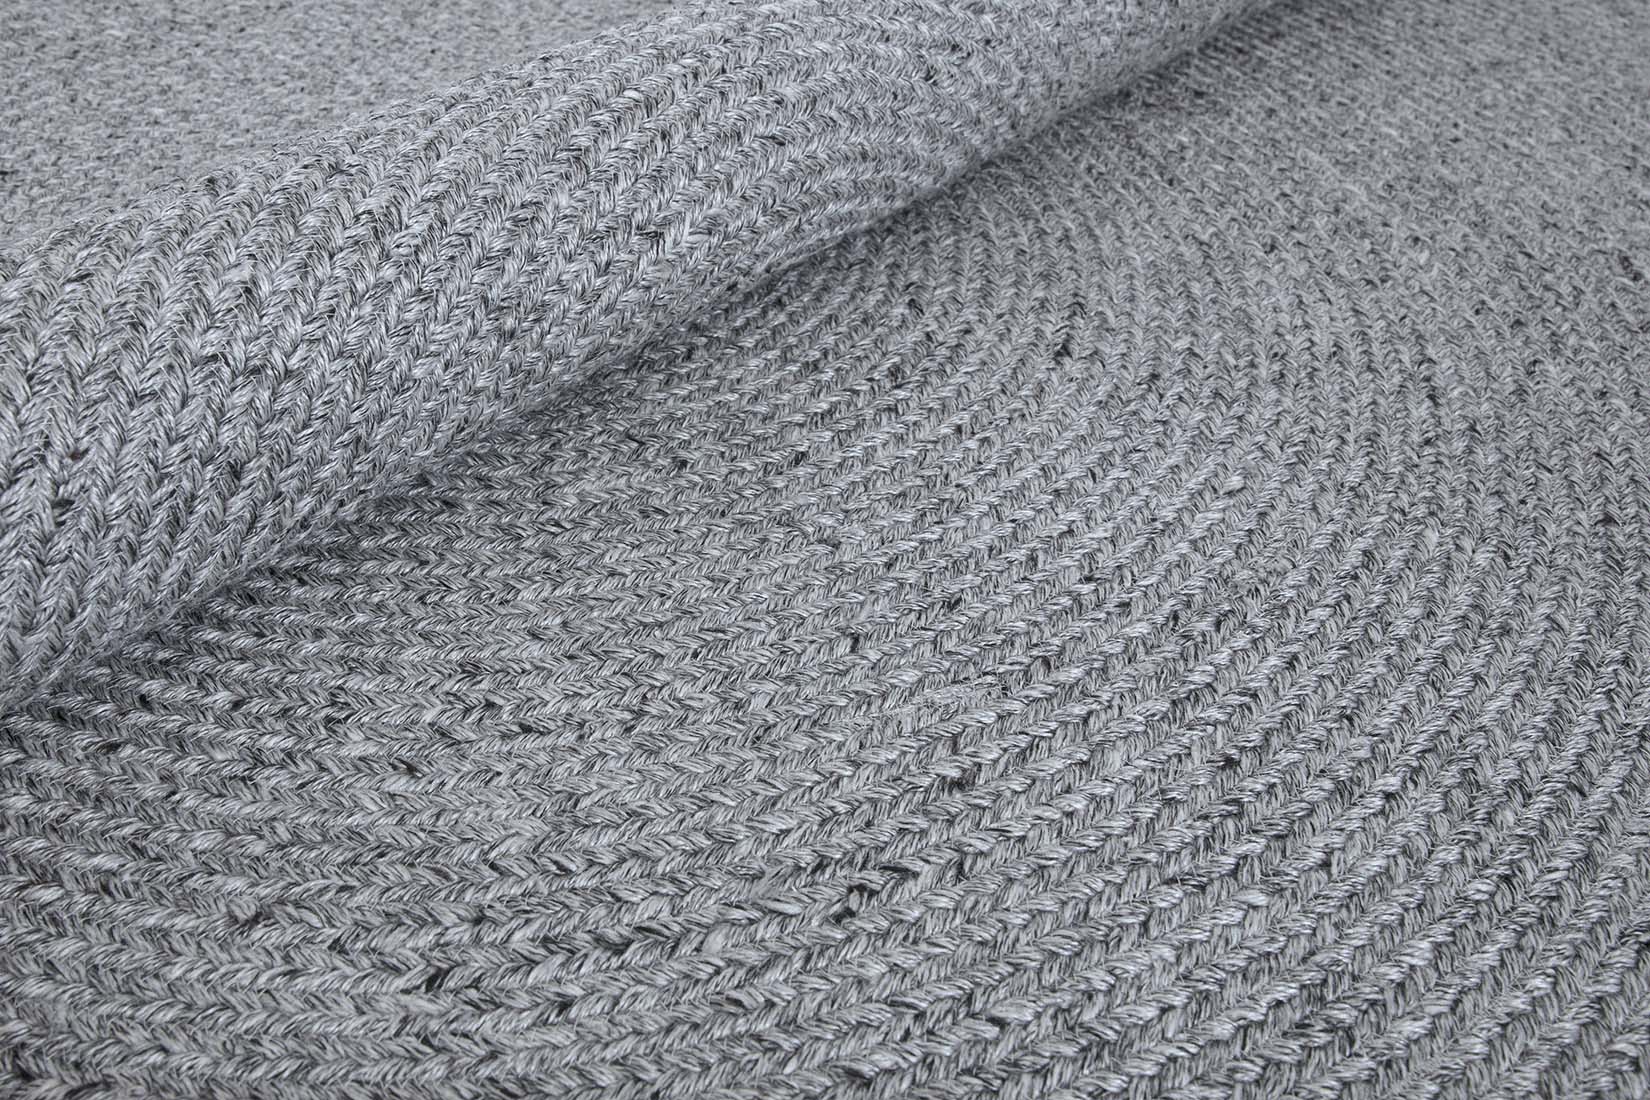 plain grey woven indoor/outdoor circle rug
